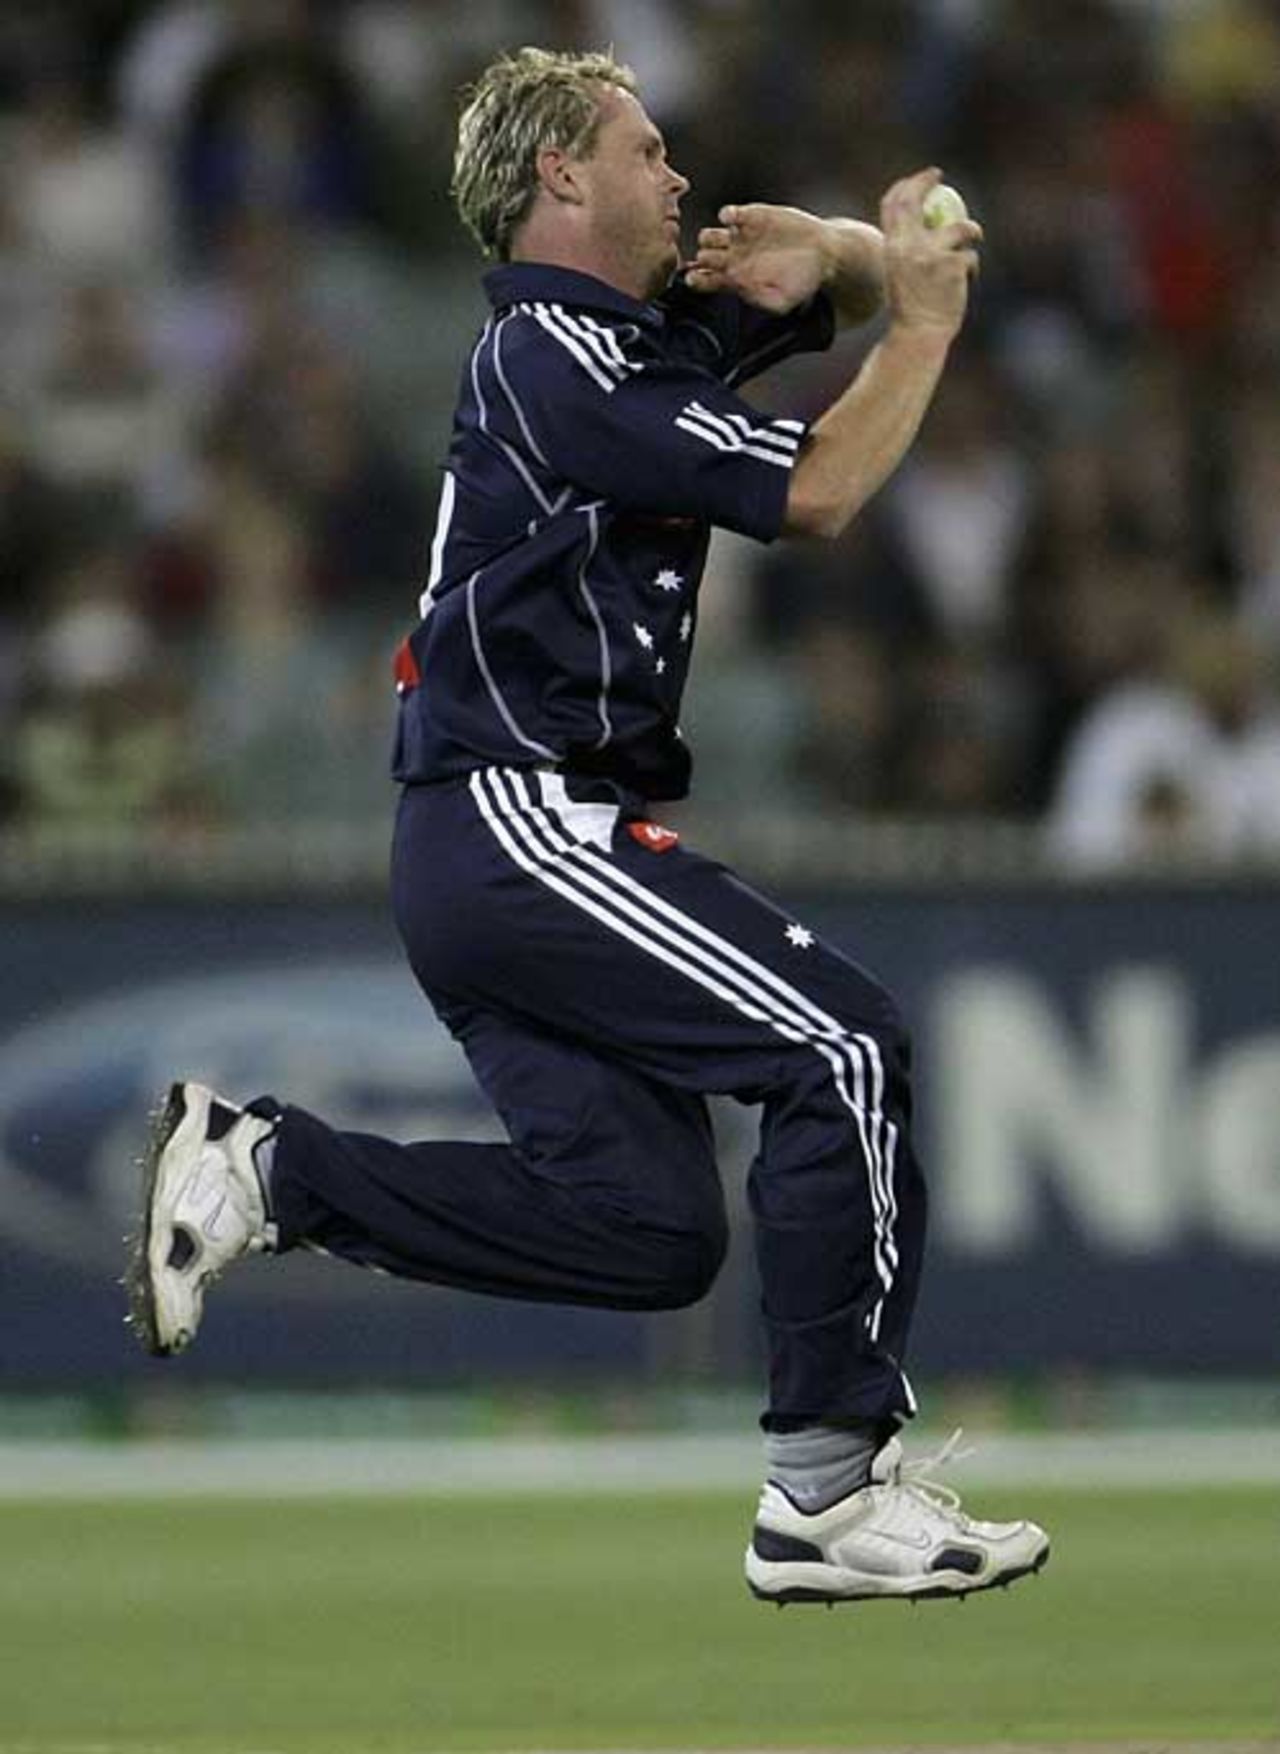 Mick Lewis took four wickets to guide Victoria to Twenty20 glory, Victoria v Tasmania, KFC Twenty20 final, Melbourne, January 13, 2007